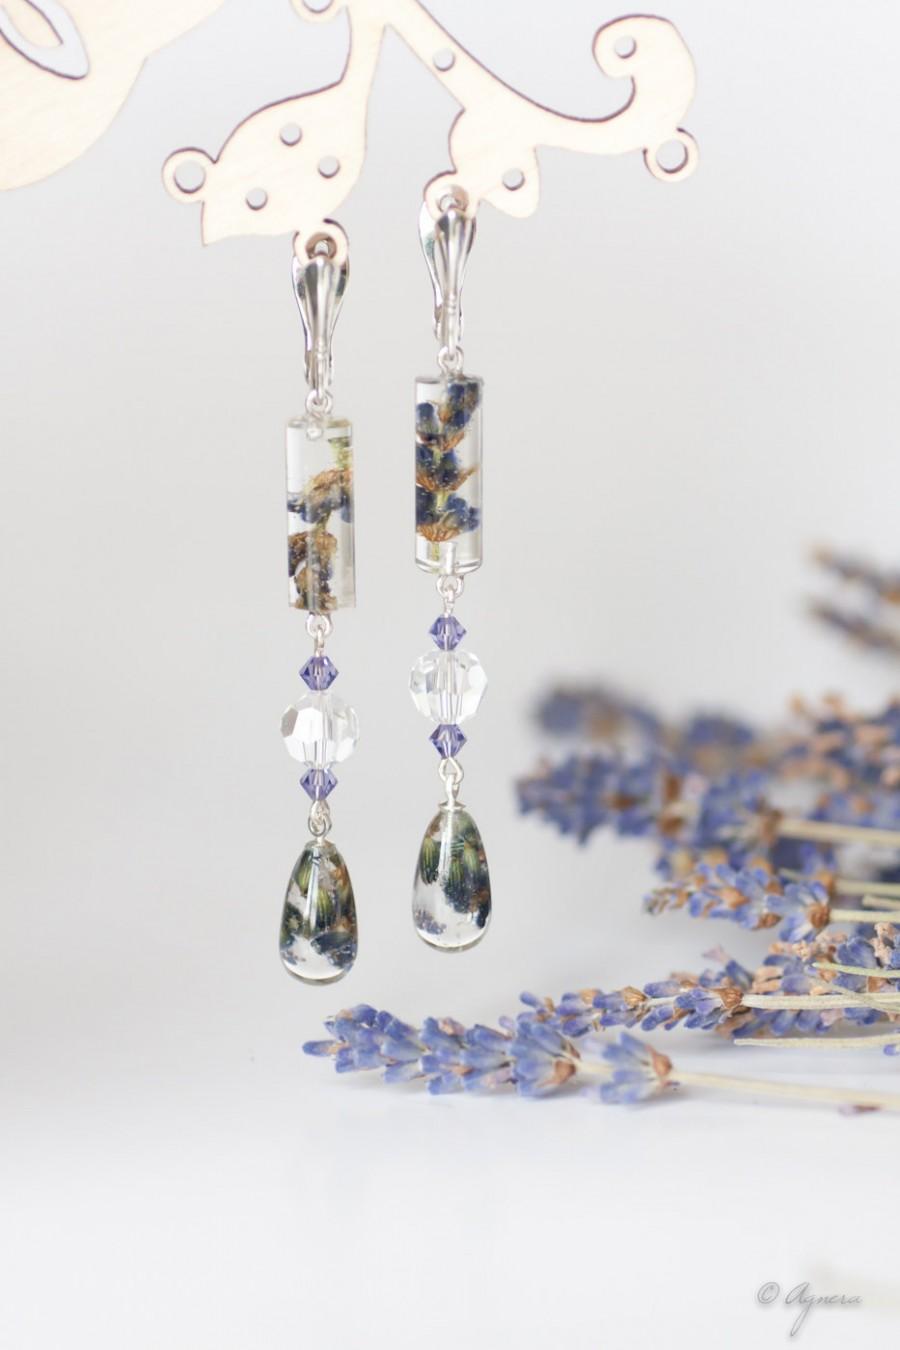 Wedding - Provence Lavender bridal earrings - Lavender earrings - Lavender inspired weddings - Dangle bridal lavender earrings - Real lavender earring